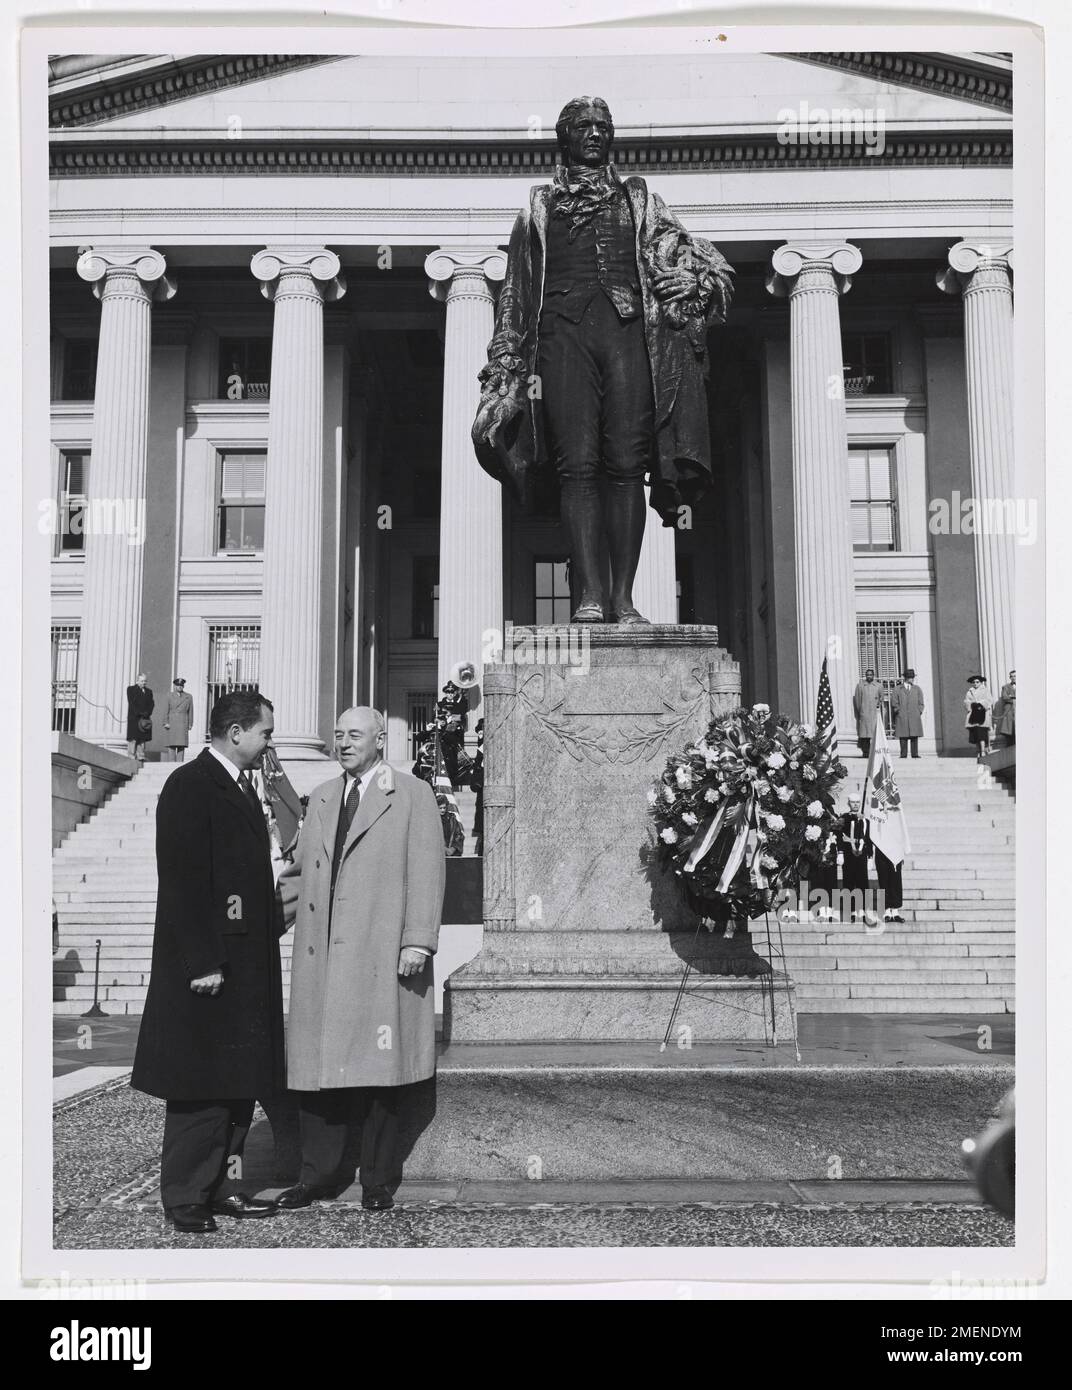 George M. Humphrey and Richard M. Nixon on Opening Day of Alexander Hamilton Bicentennial in Washington, DC. Picture shows George M. Humphrey and Richard Nixon by Alexander Hamilton statue in front of U.S. Treasury Building in Washington, DC. Stock Photo